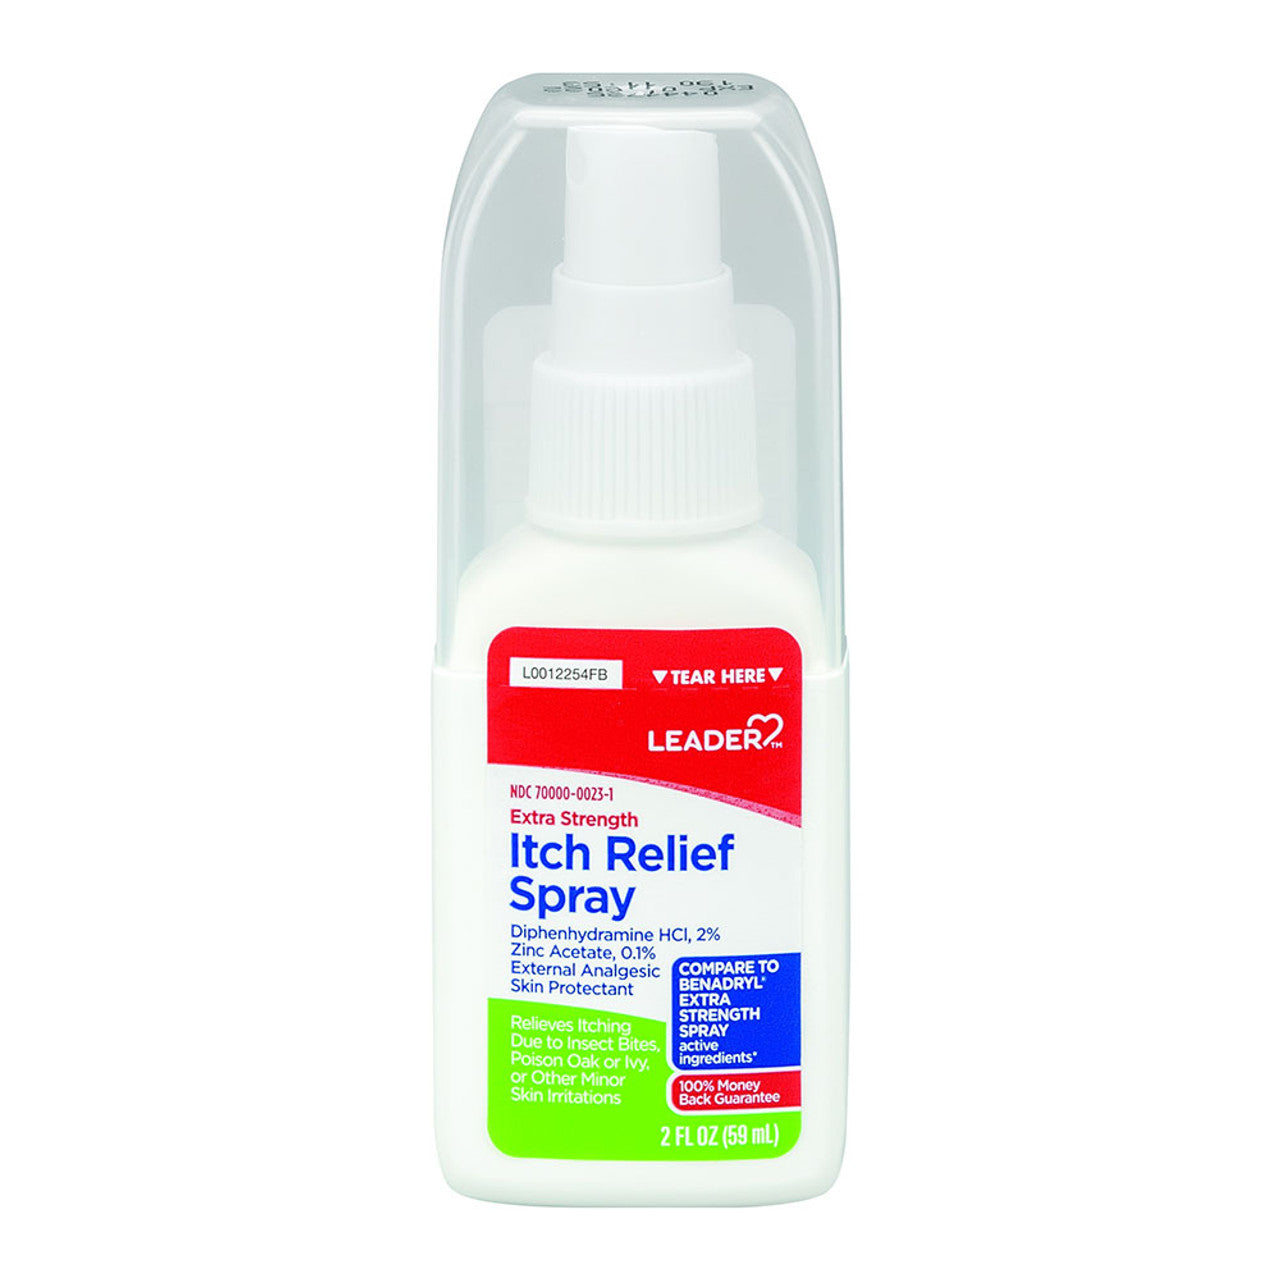 Leader (TM) Itch Relief Spray 2 Oz (Compare to Benadryl), Spray Non-Medical